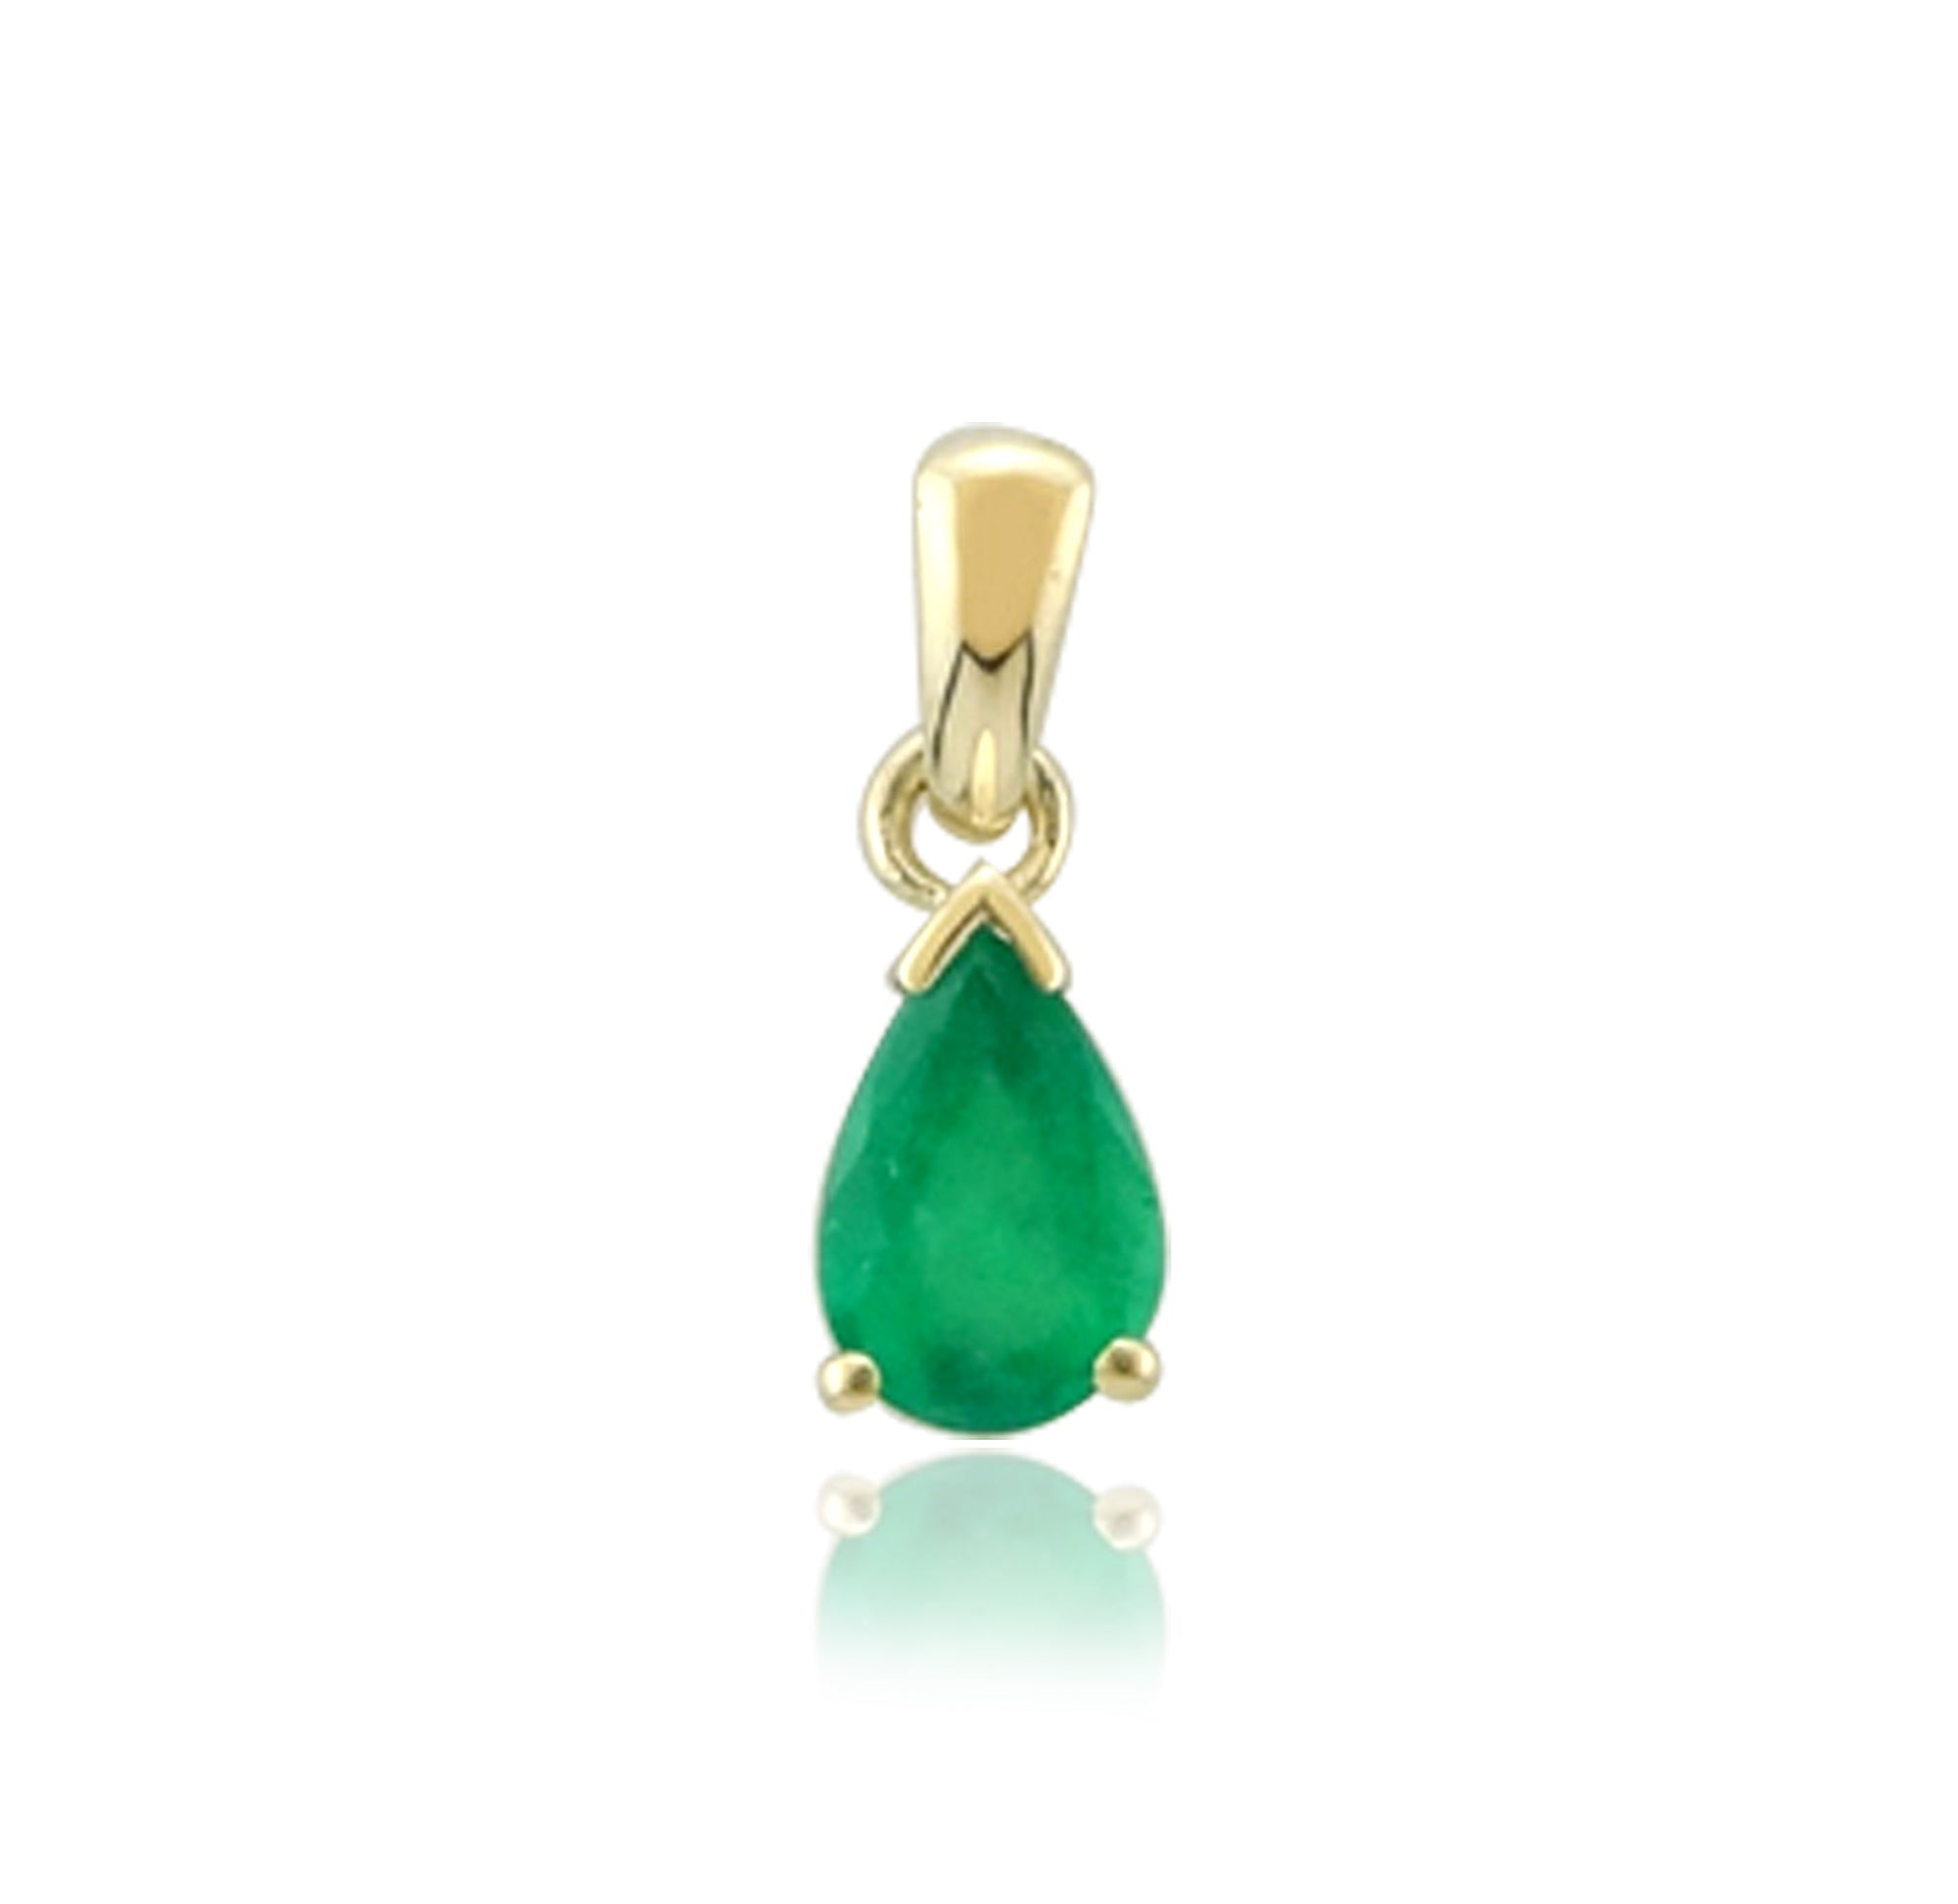 9ct gold 6x4mm pear shape emerald pendant